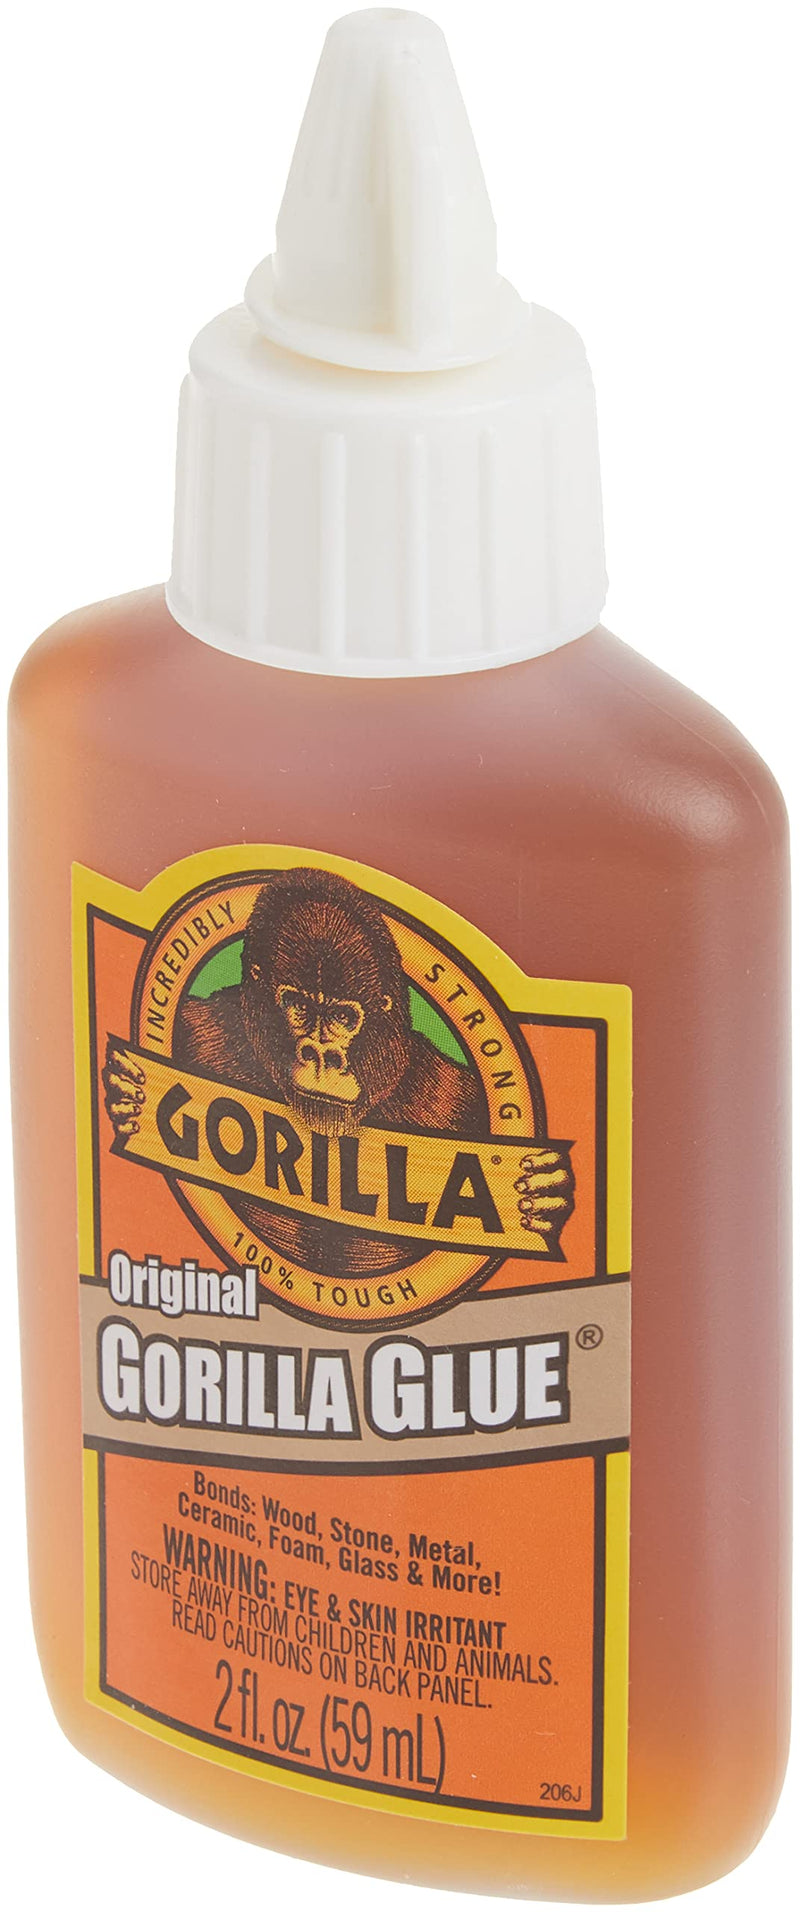 [Australia - AusPower] - Gorilla Original Gorilla Glue, Waterproof Polyurethane Glue, 2 Ounce Bottle, Brown, (Pack of 1) 1 - Pack 